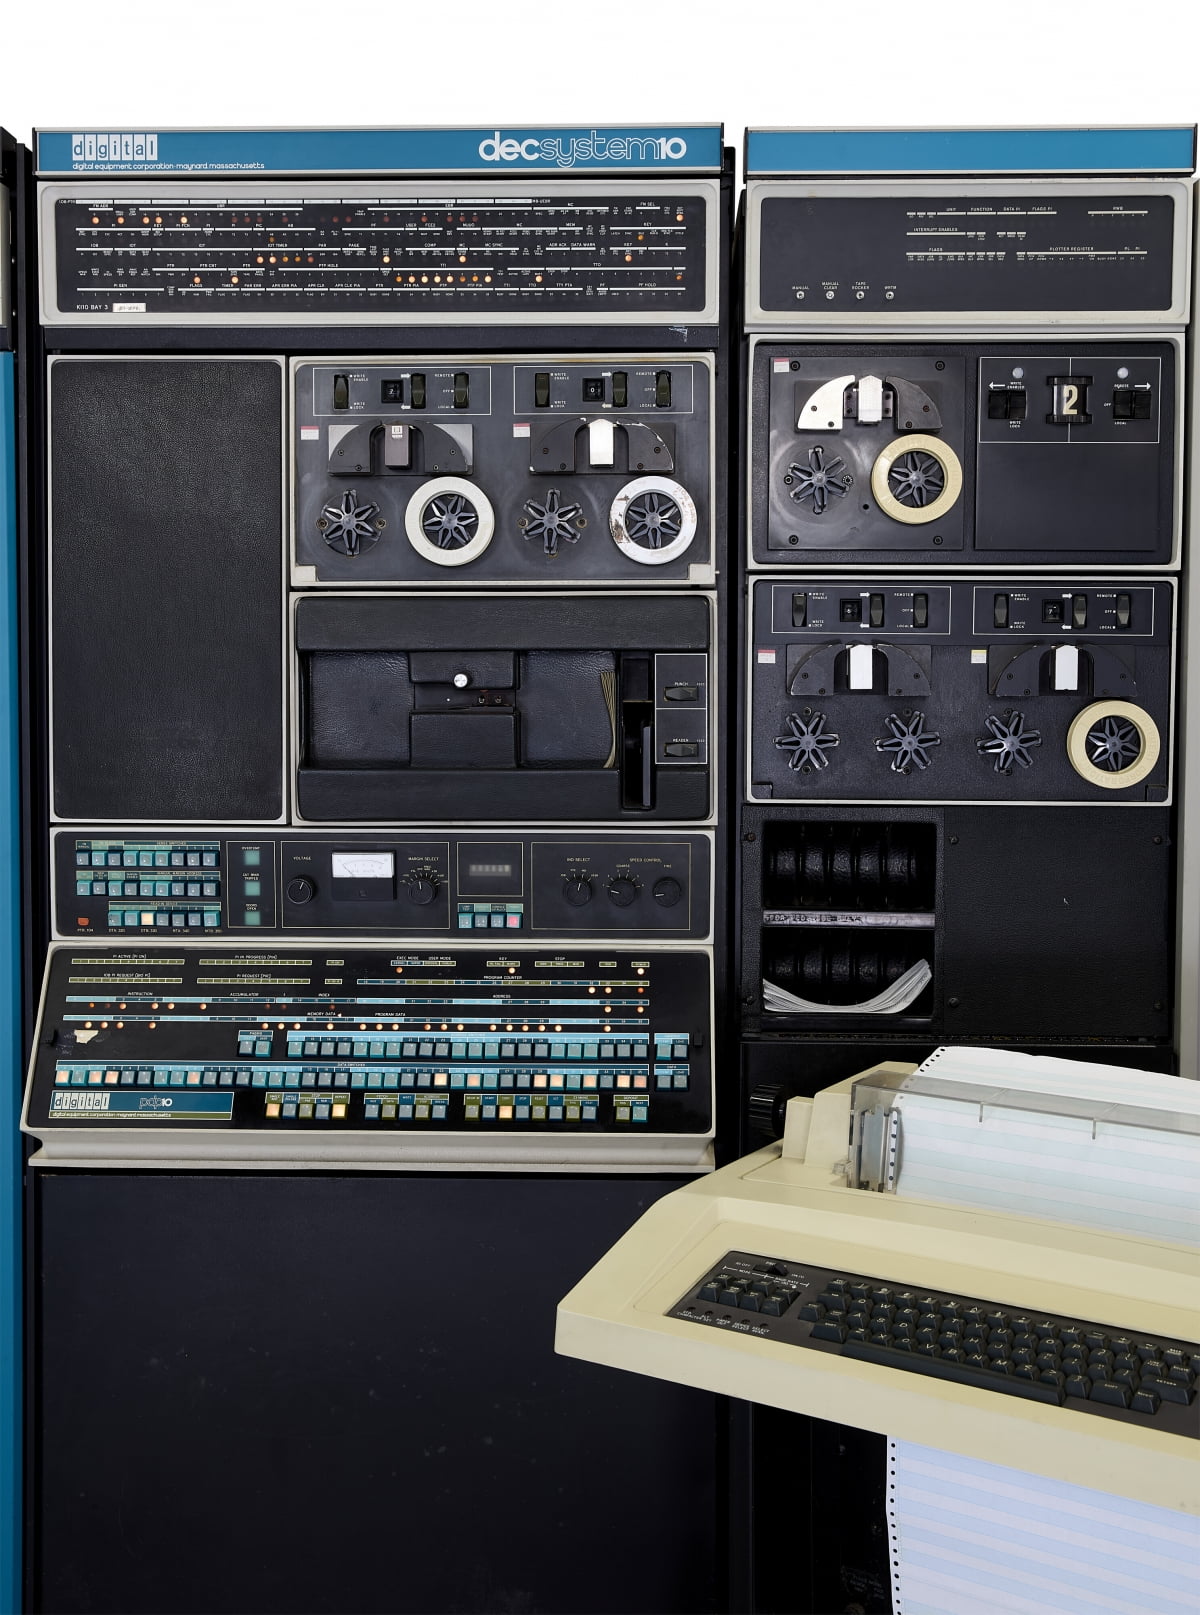 A DEC PDP-10 KI-10 메인프레임 컴퓨터, Digital Equipment Corporation, 1974